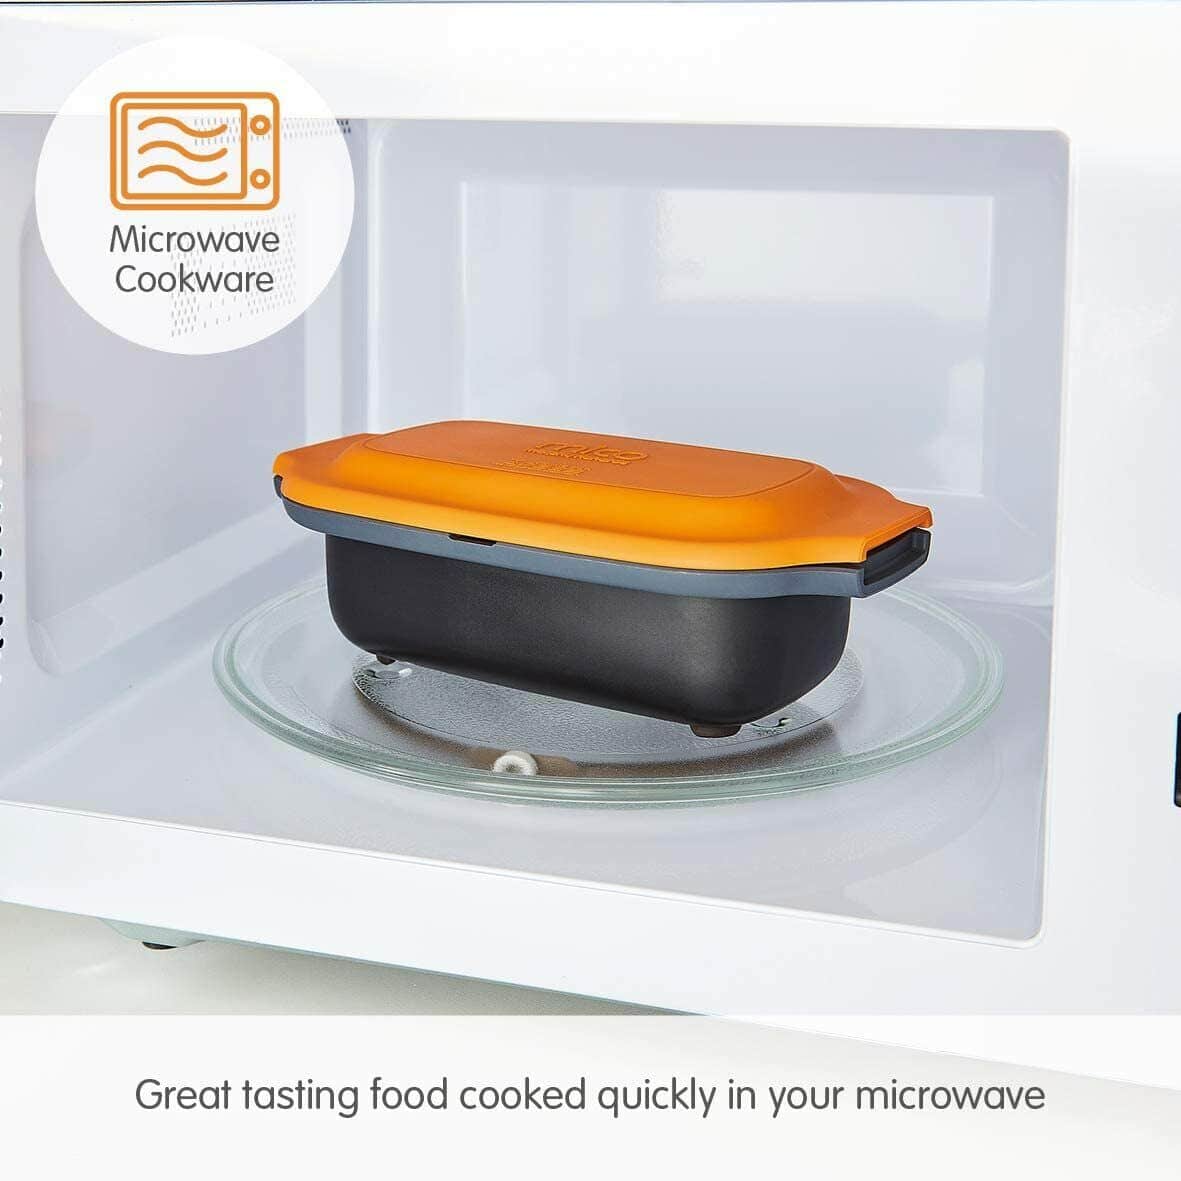 Morphy Richards 511645 MICO MULTI-POT Microwave Cookware Eggs/Burgers 8911